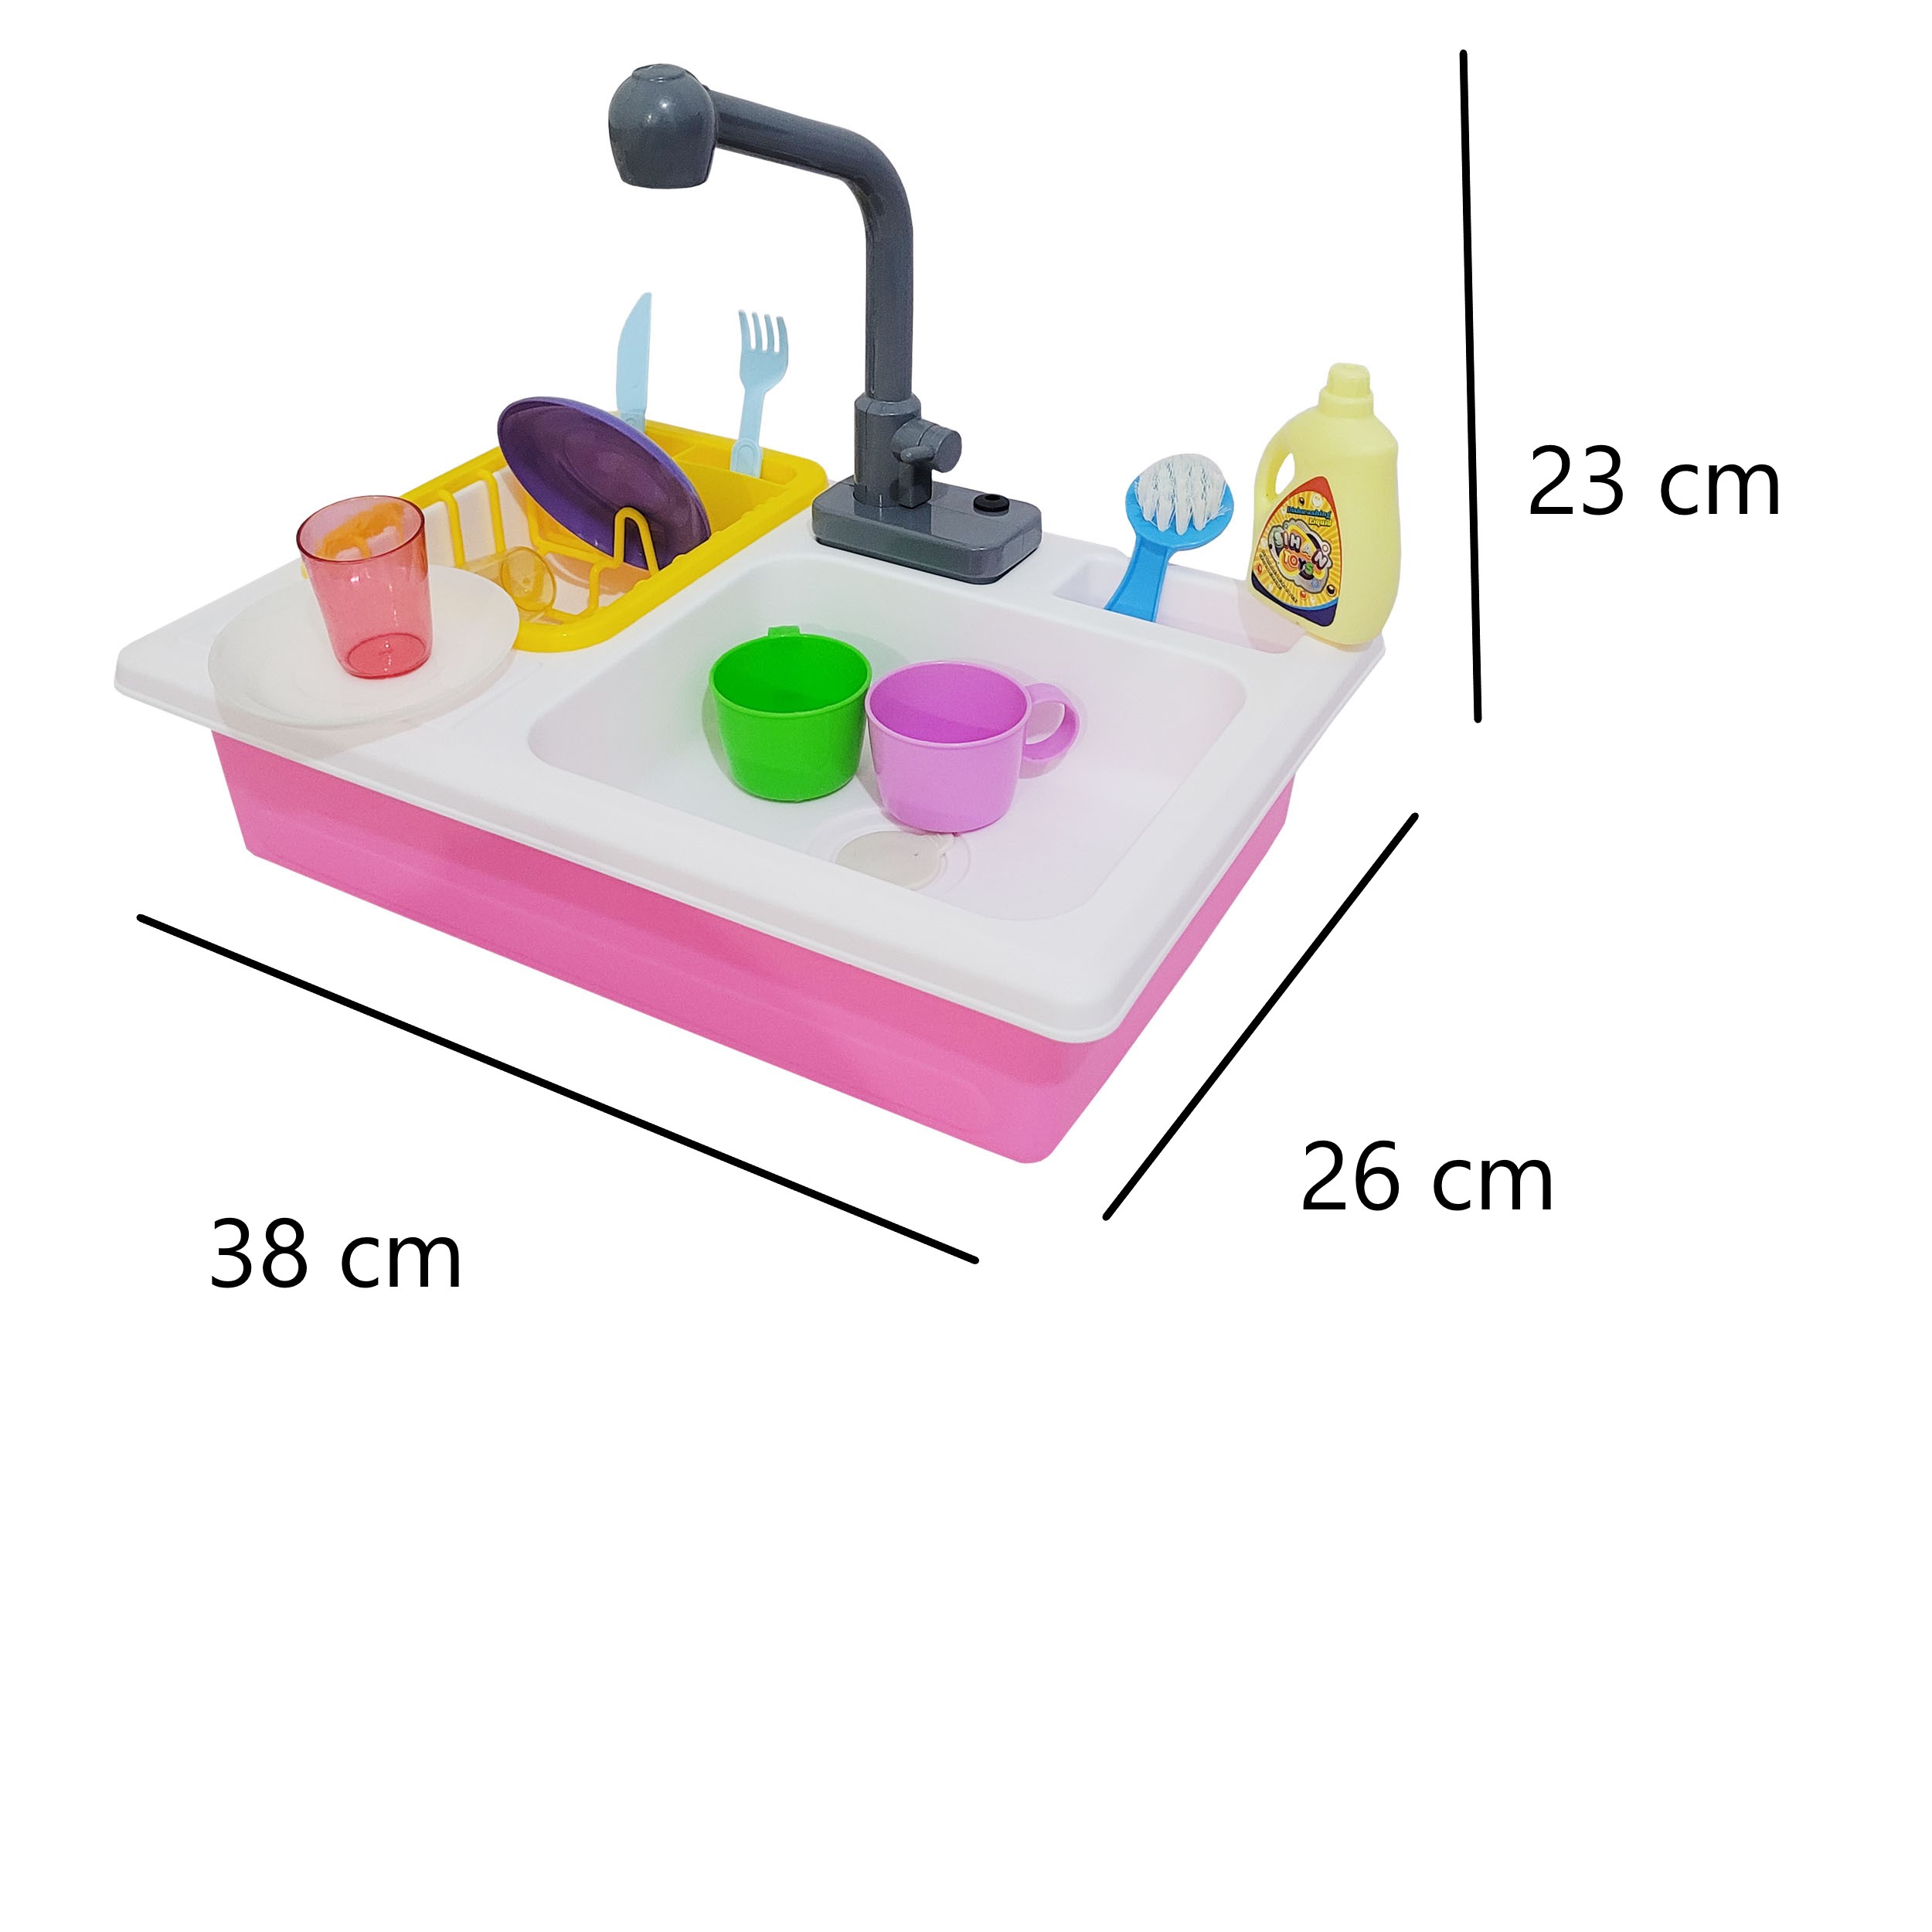 اسباب بازی سینک ظرفشویی مدل Sink ELECTRIC کد 0090877 -  - 2